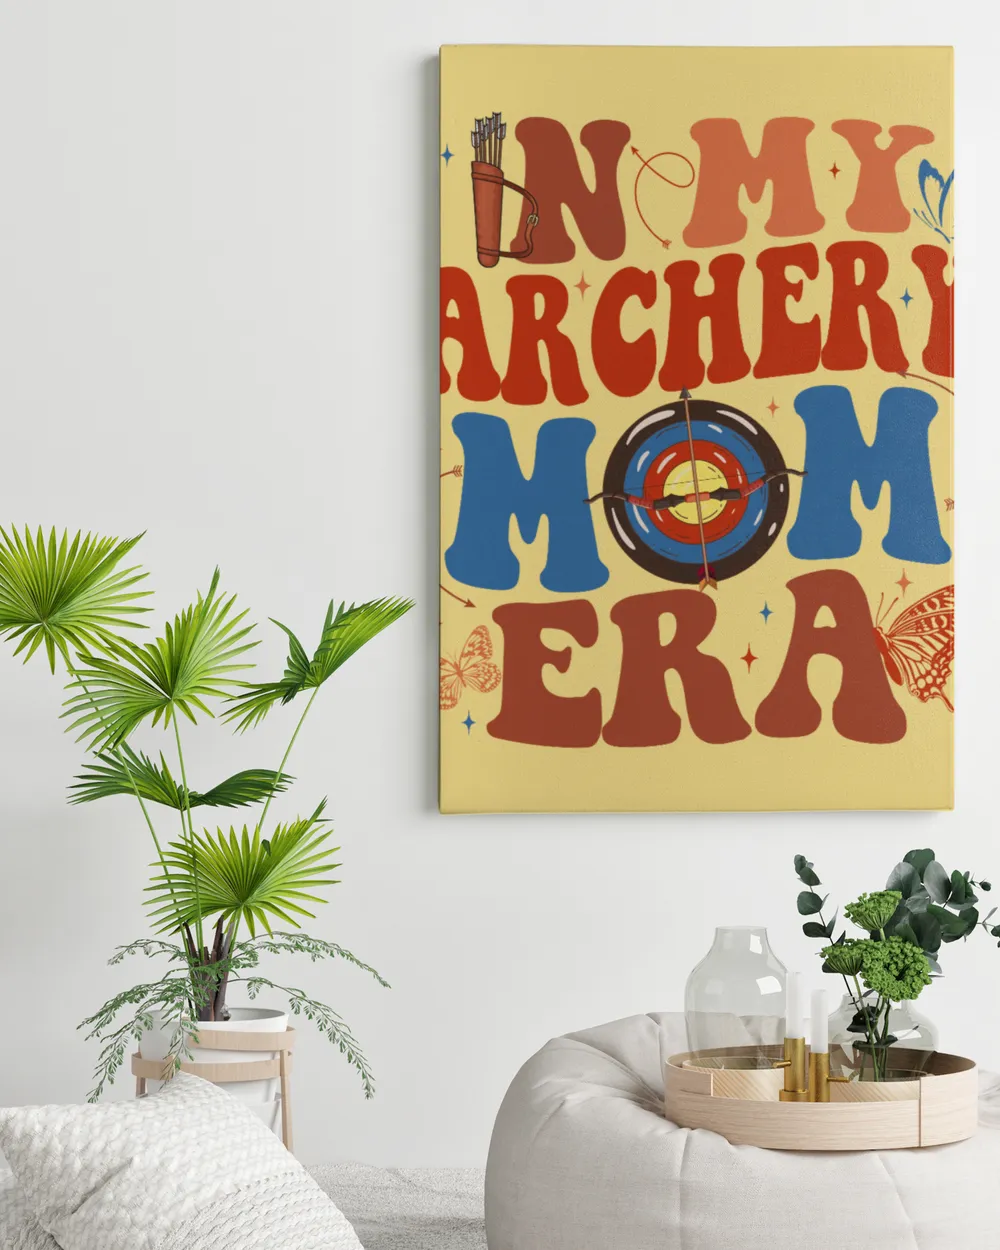 In My Archery Mom Era Shirt, Funny Archery Mom Shirt, Archery Mom Shirt, Archery Shirt, Gift For Archery Mom, Archer Mom Shirt